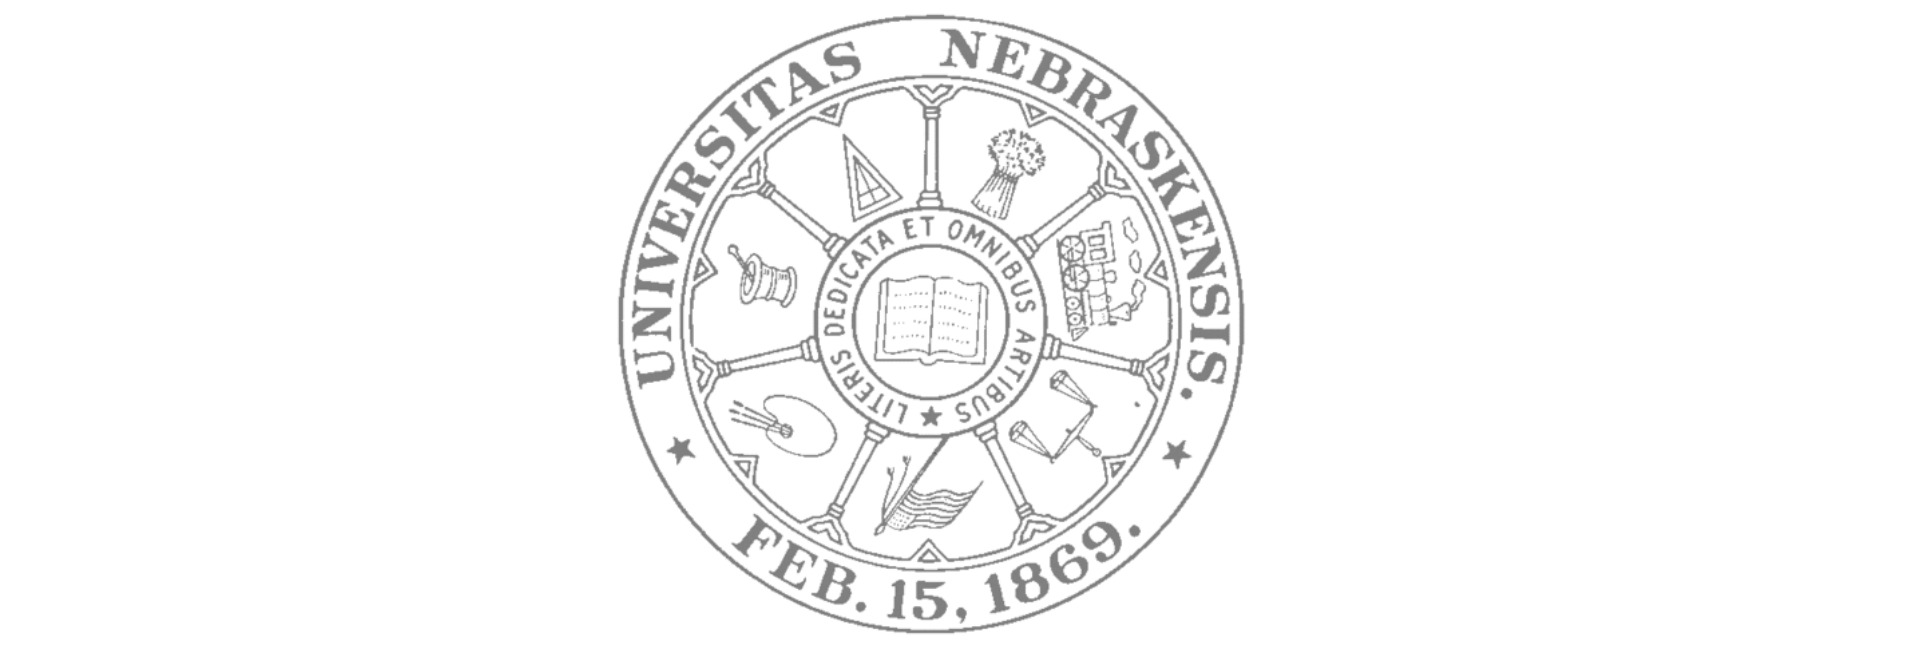 The University of Nebraska seal